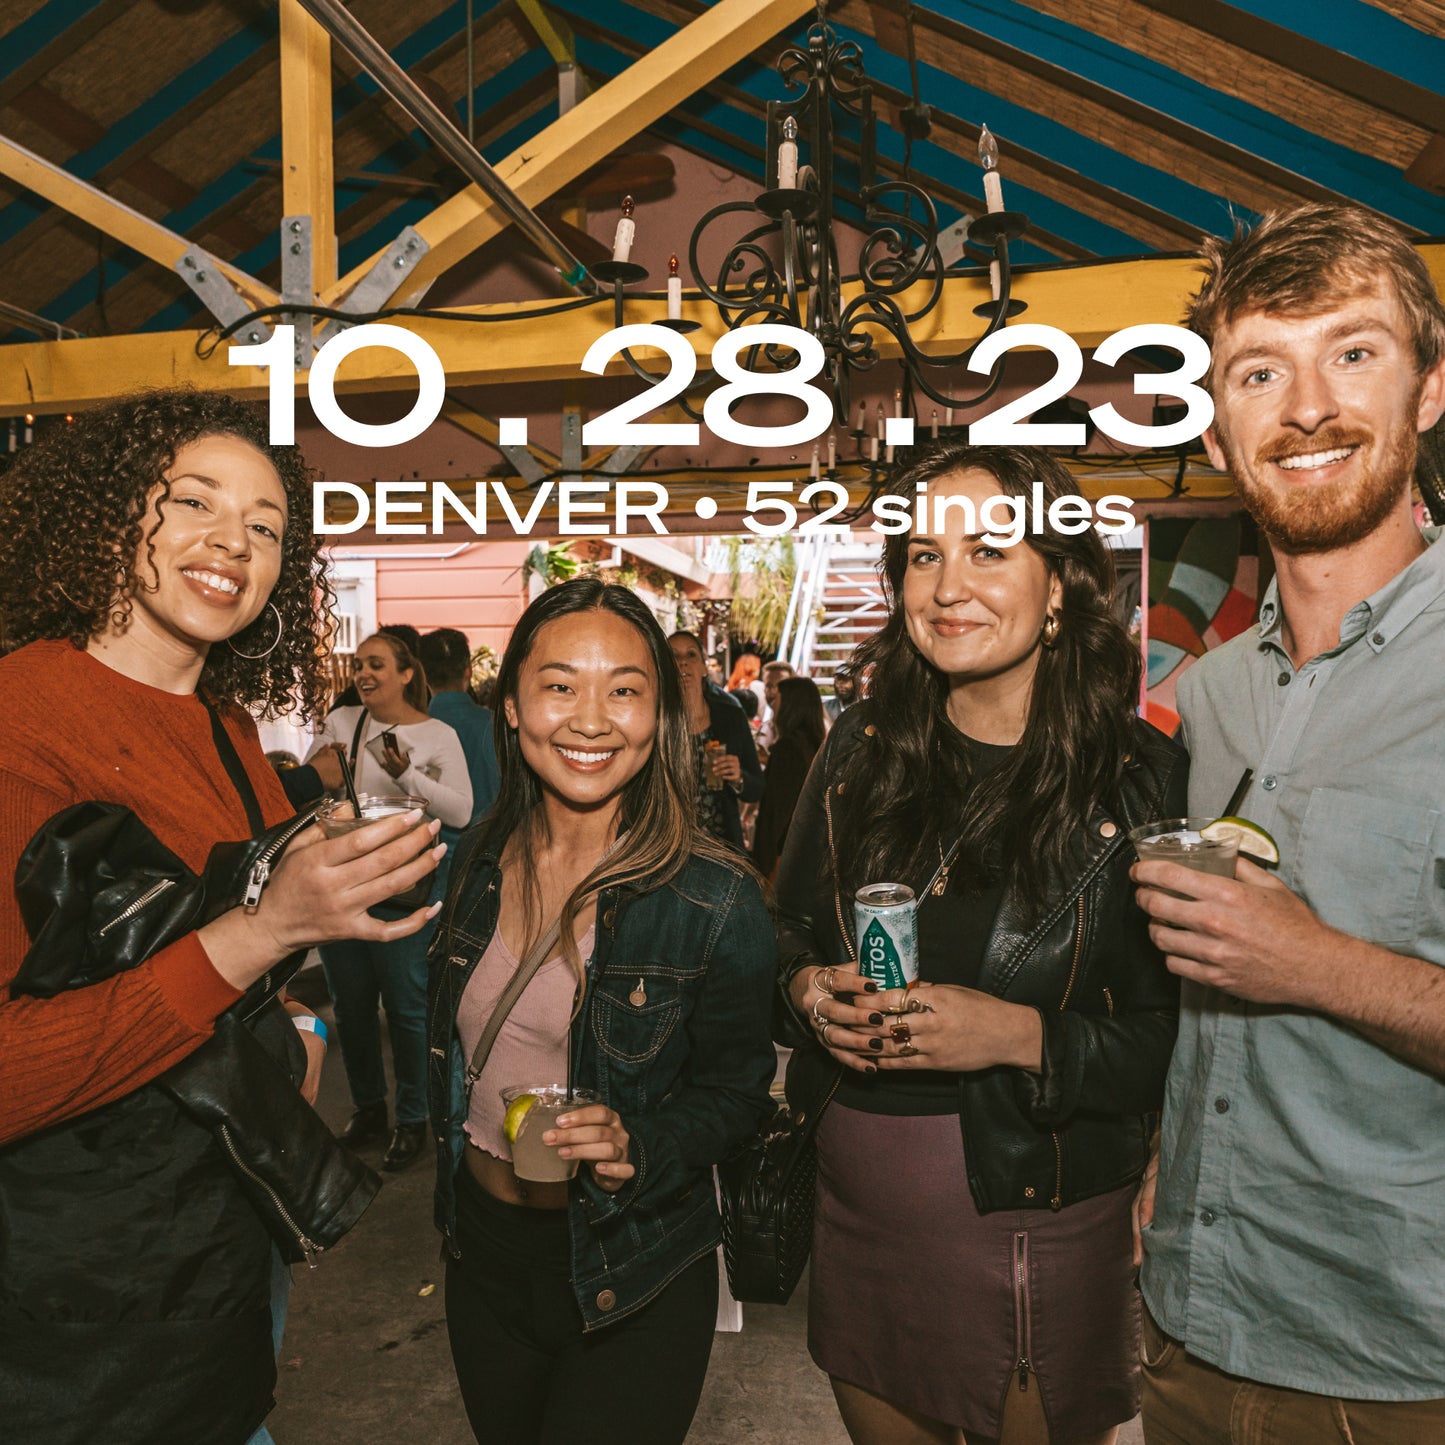 Denver: Singles Happy Hour